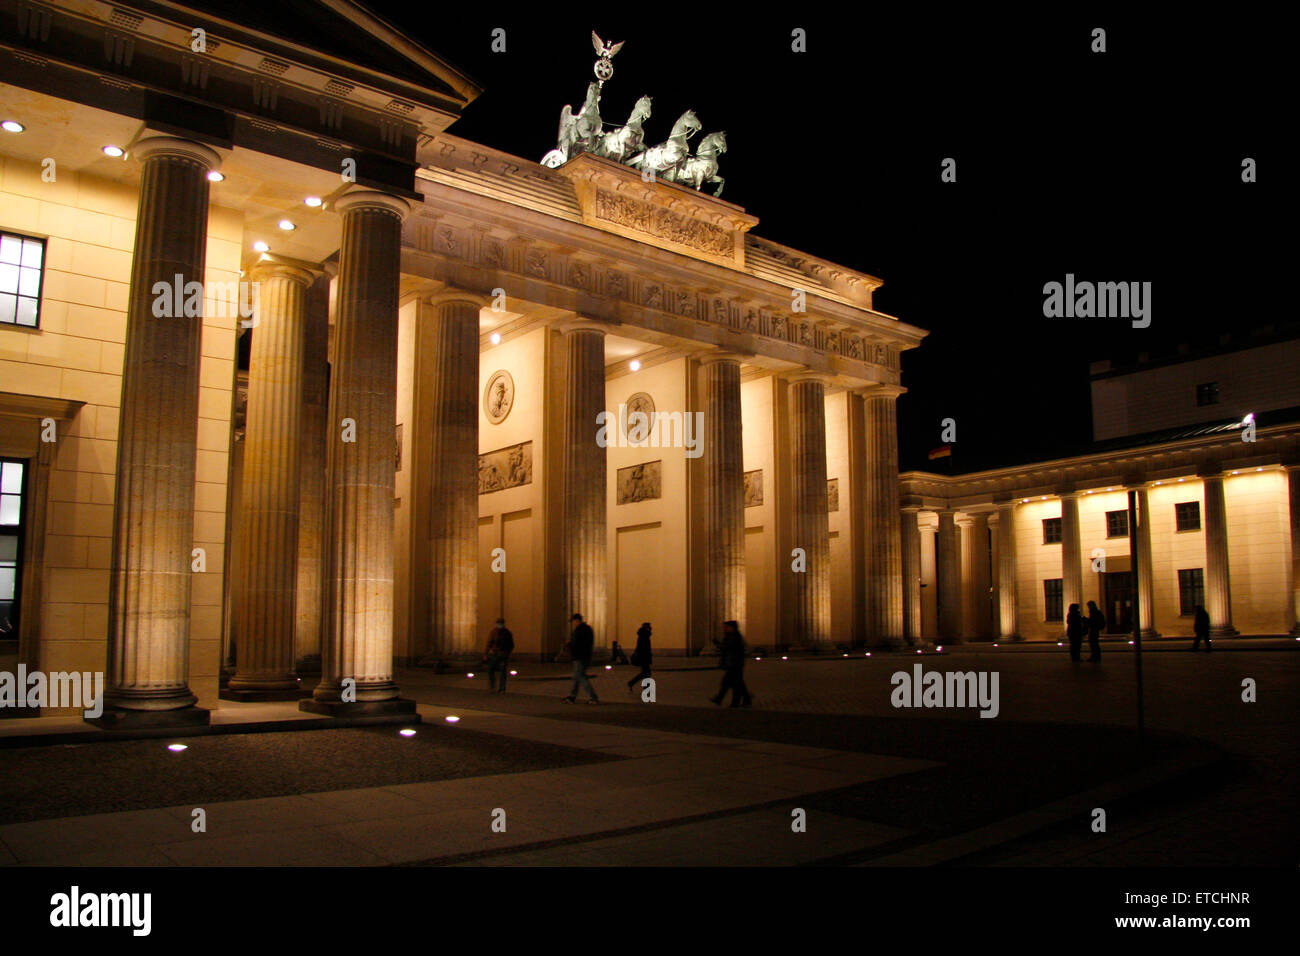 Februar 2012 - BERLIN: das Brandenburger Tor am Pariser Platz in Berlin-Mitte. Stockfoto